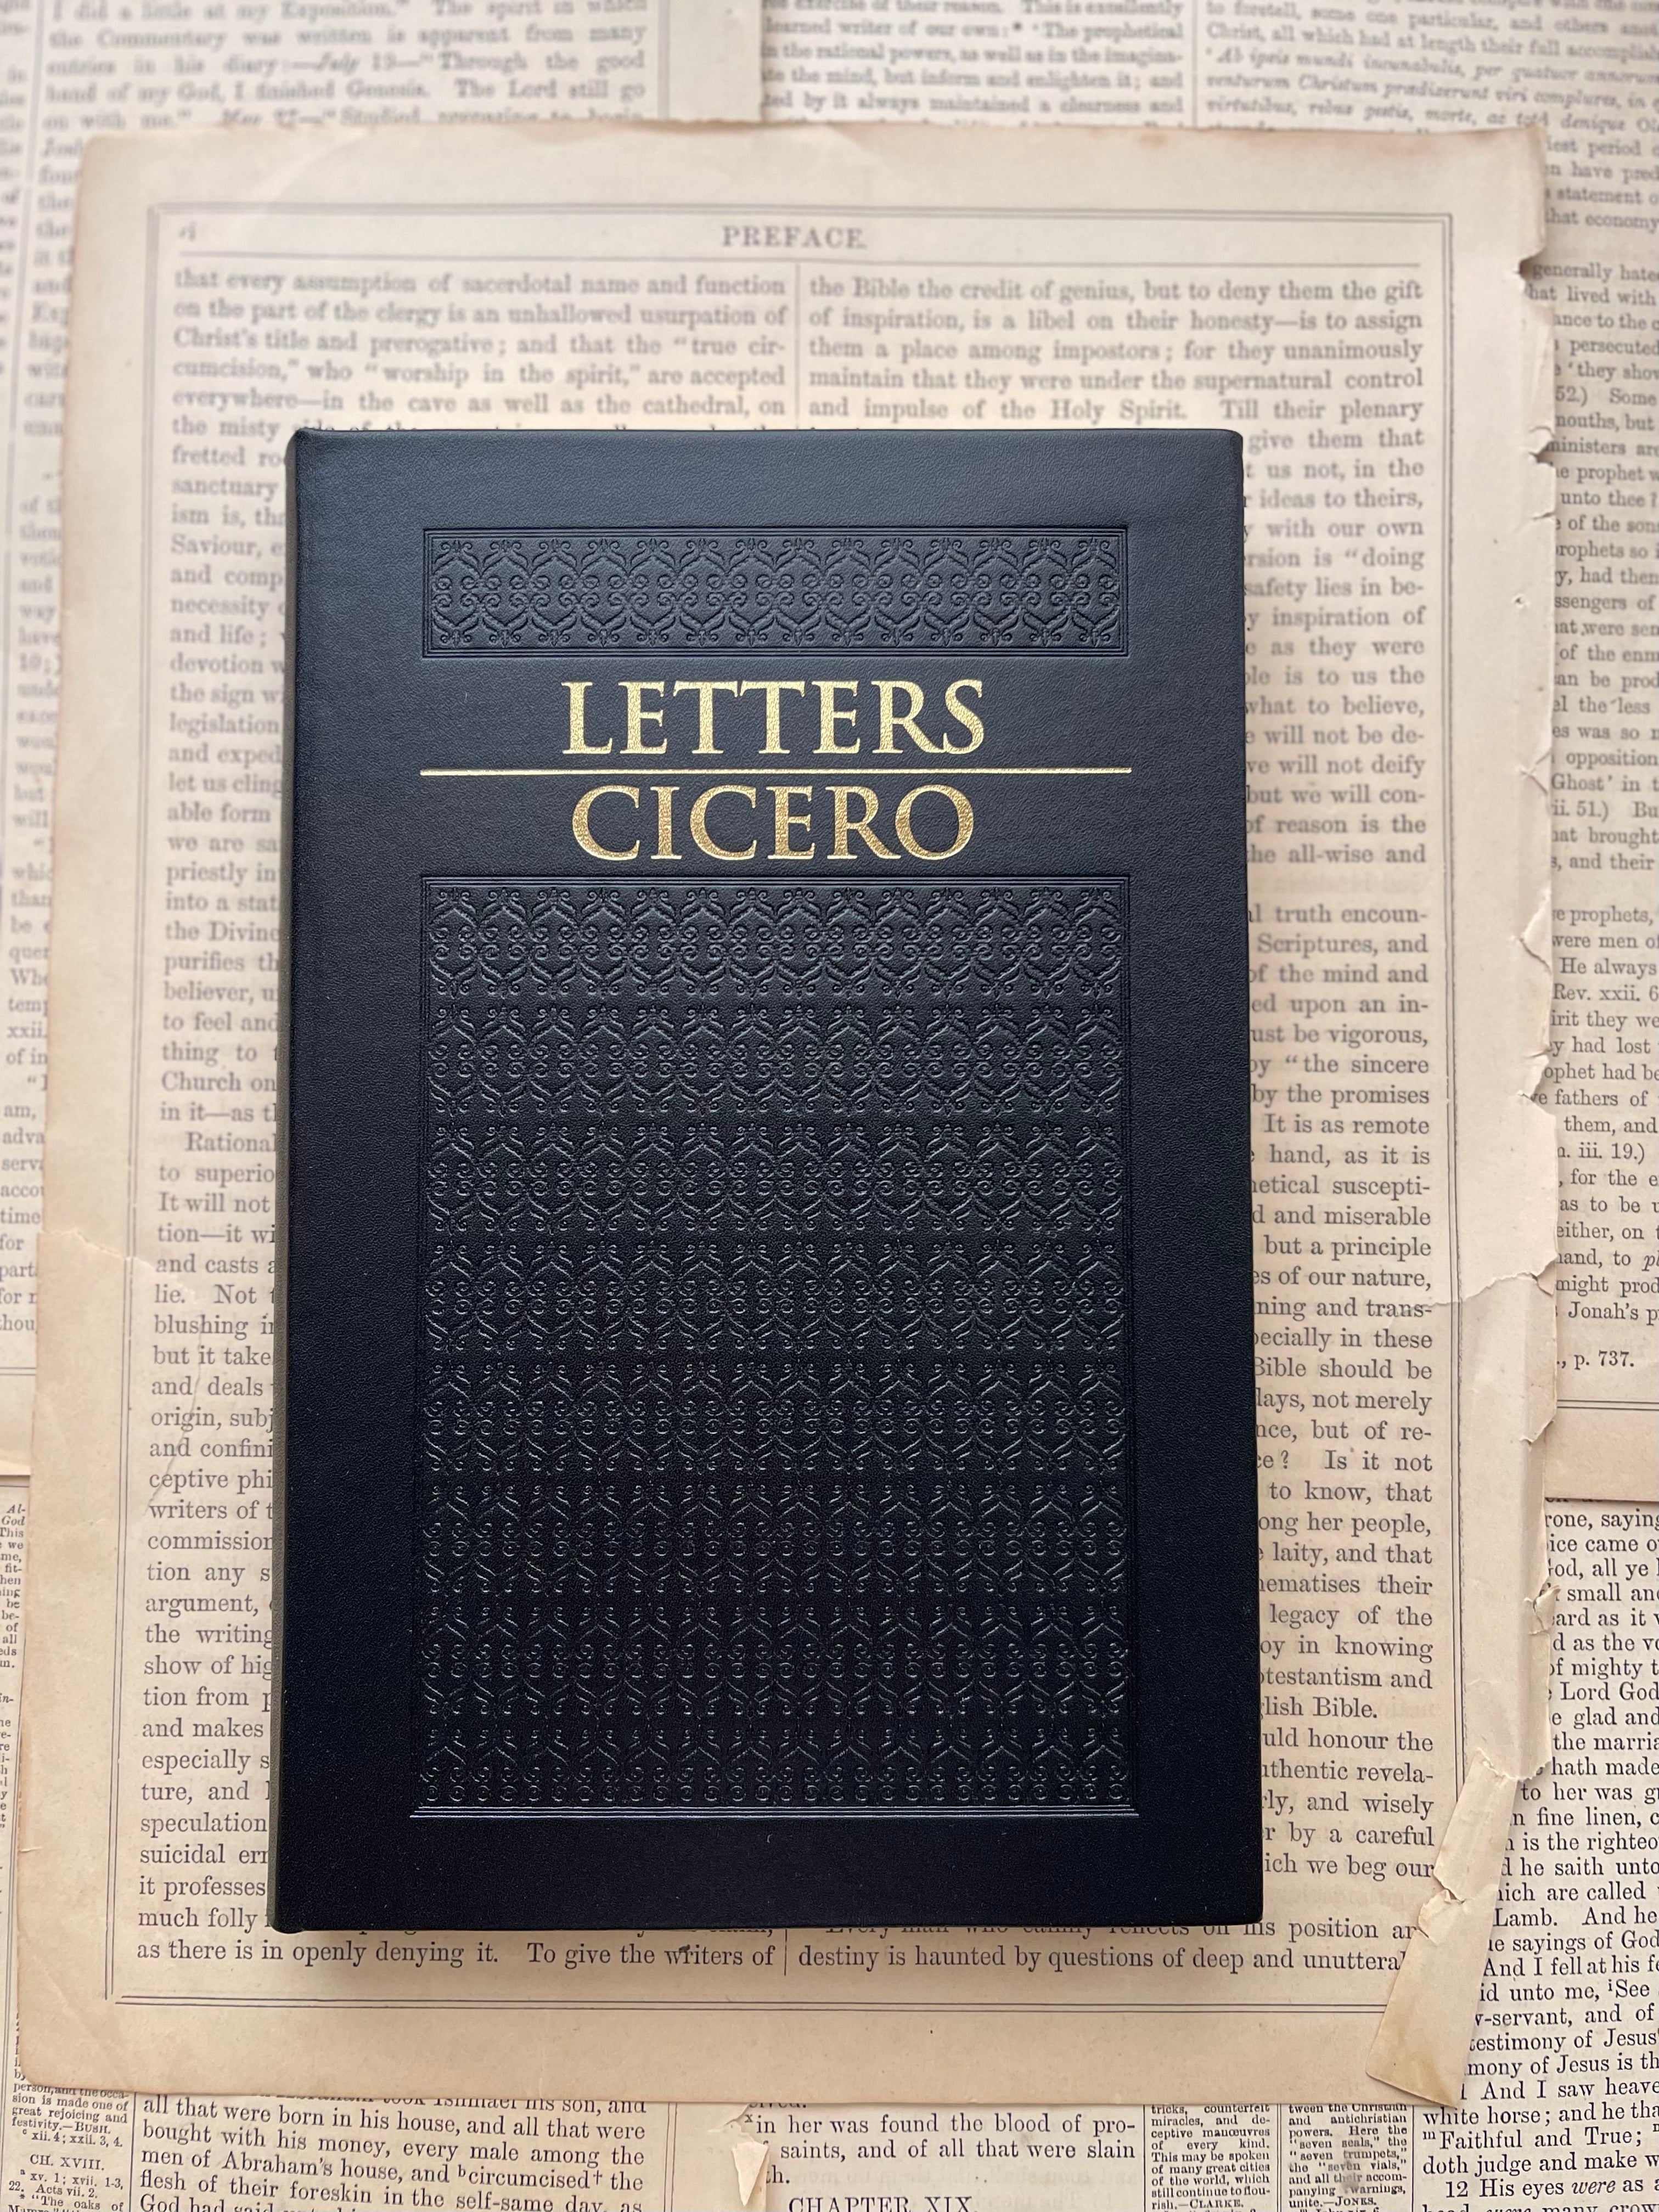 Minor Dialogues by Seneca: Aubrey Stewart Translation in Hardcover Edition